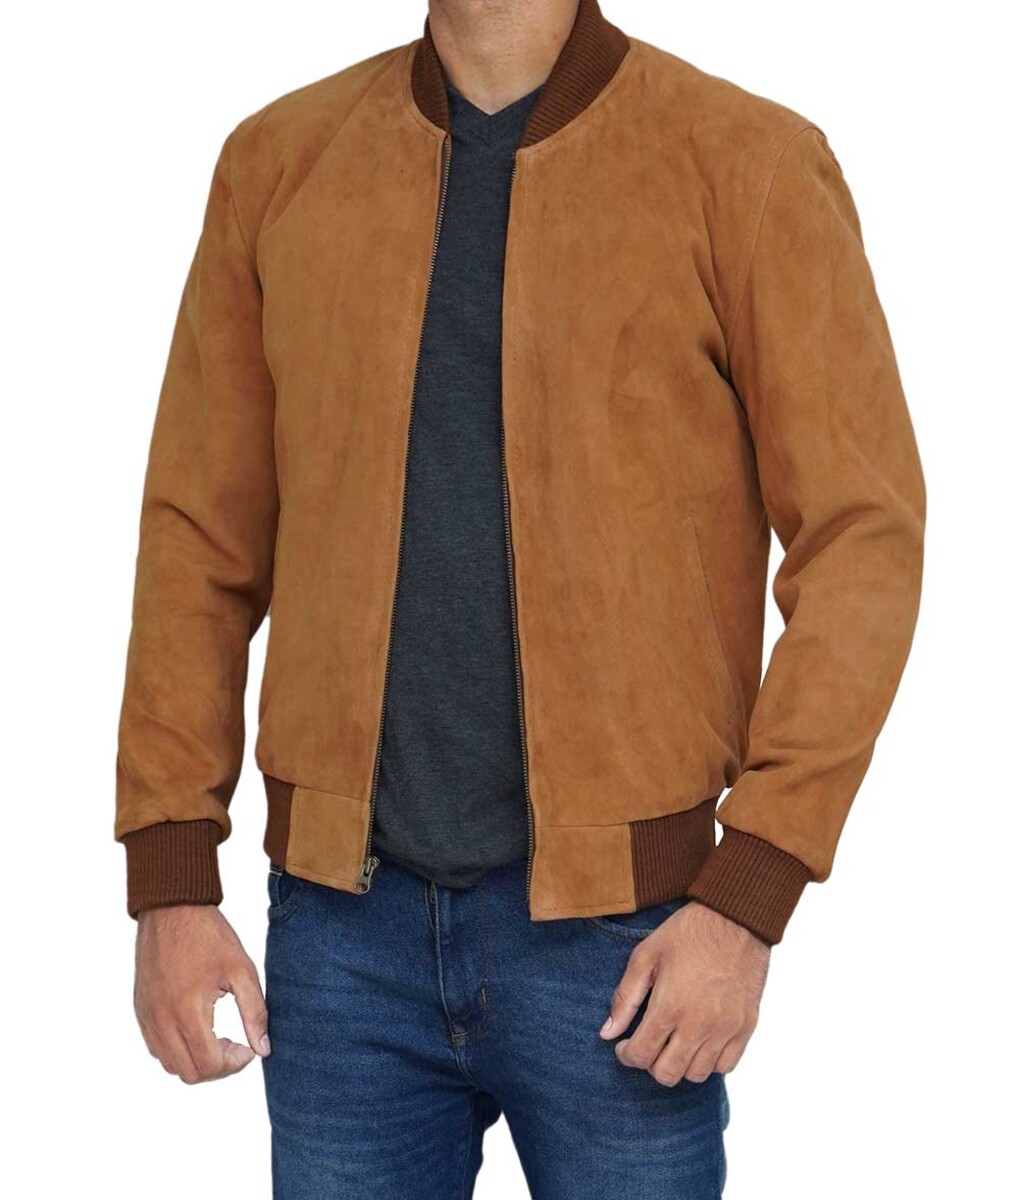 Adamsville_Camel_Leather_jacket